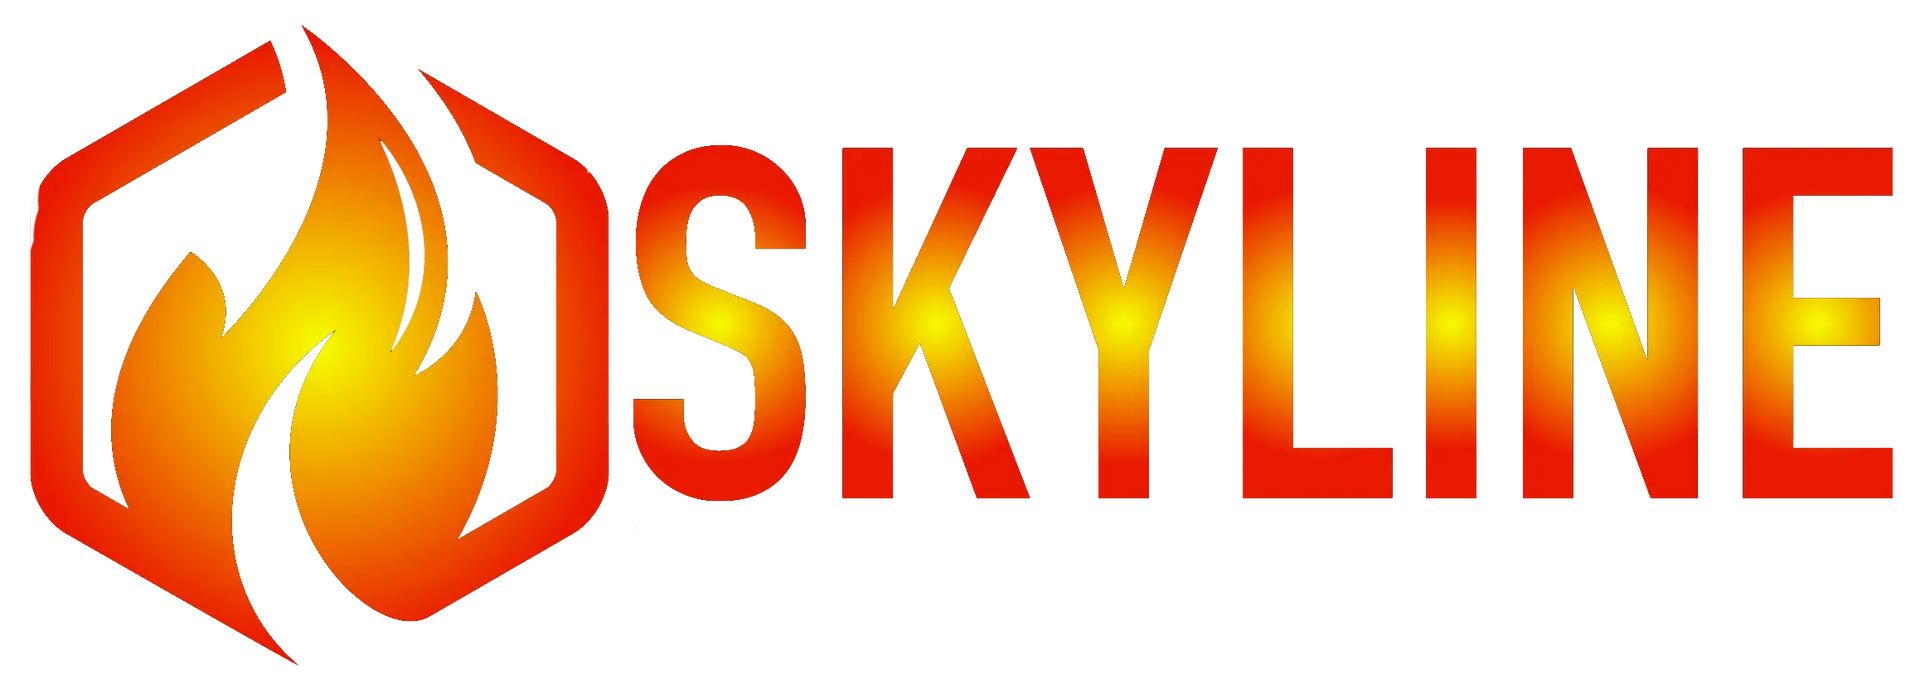 Skyline Hearth and Fire Logo